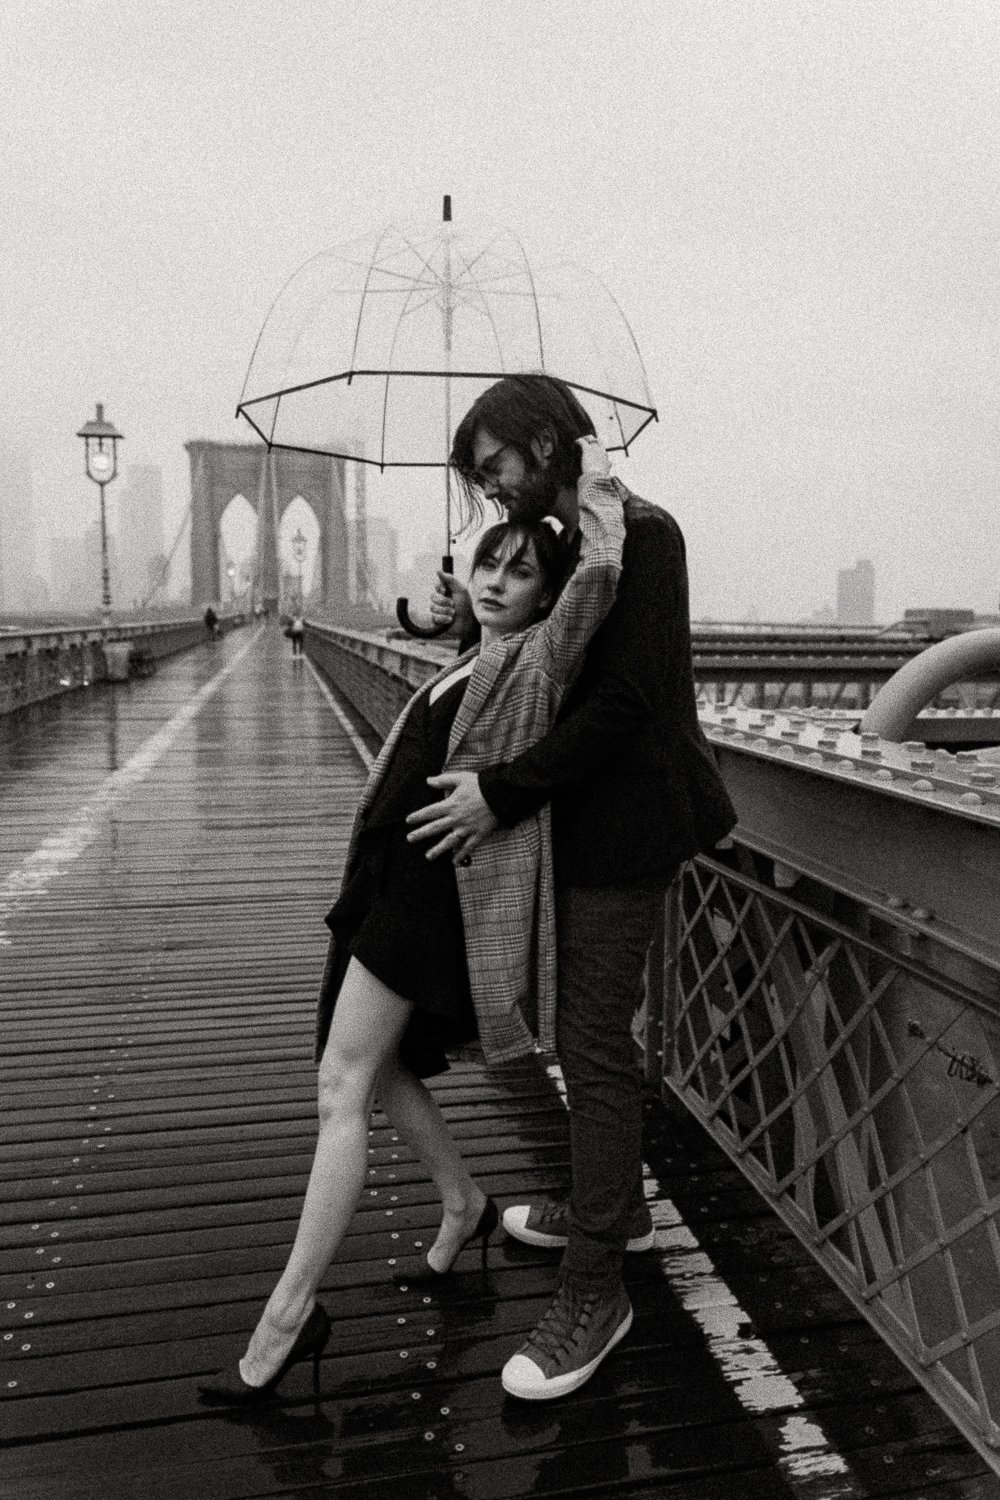 couples photoshoot in the rain on brooklyn bridge in nyc